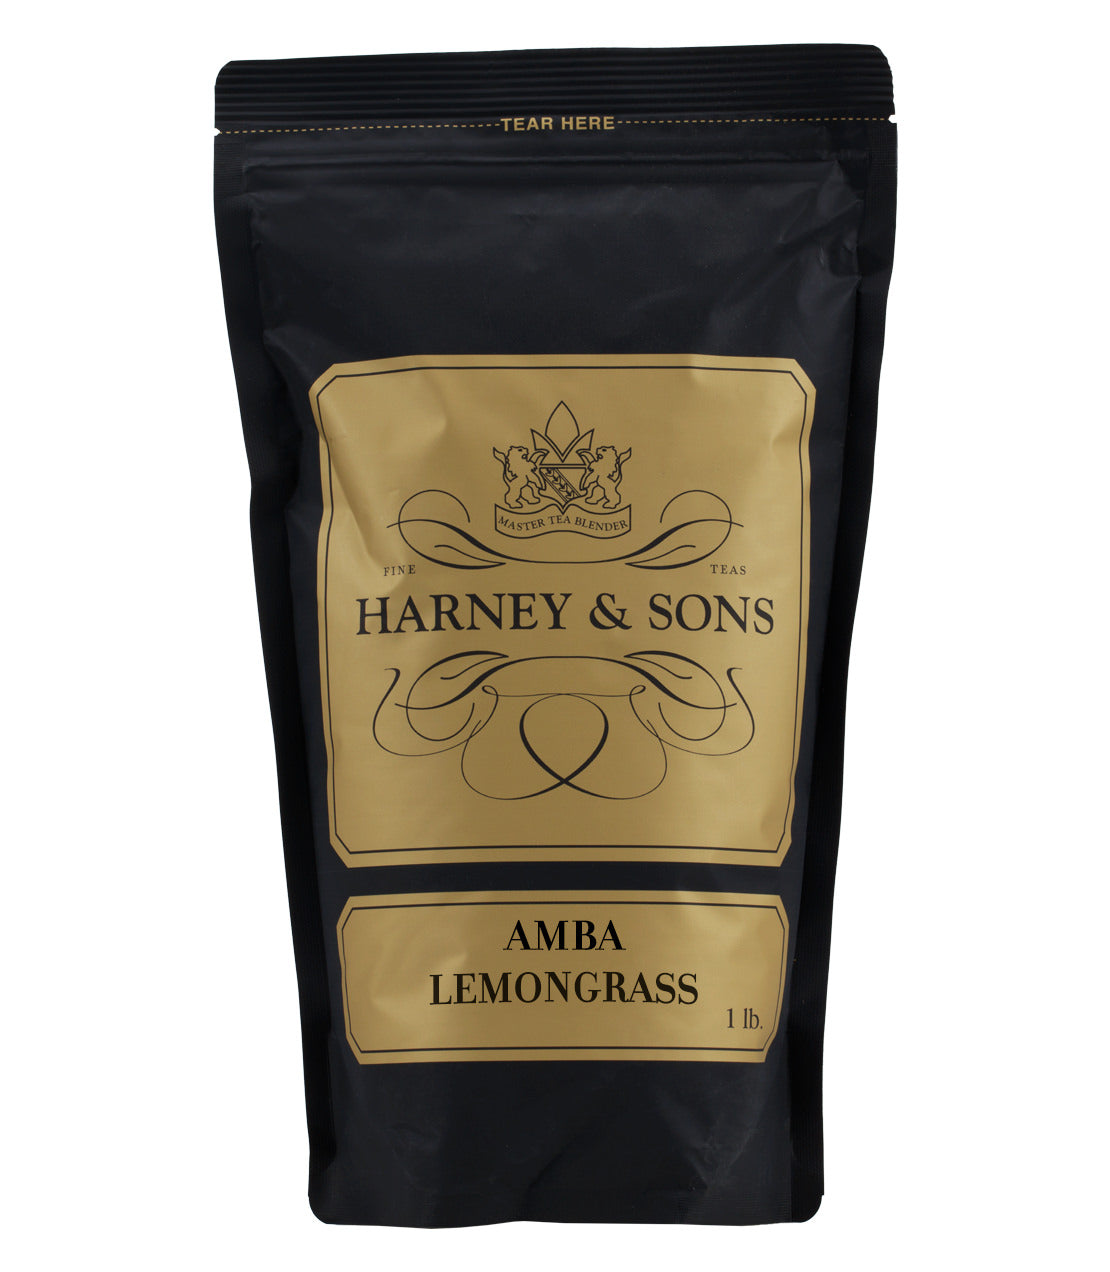 Amba Lemongrass - Loose 1 lb. Bag - Harney & Sons Fine Teas